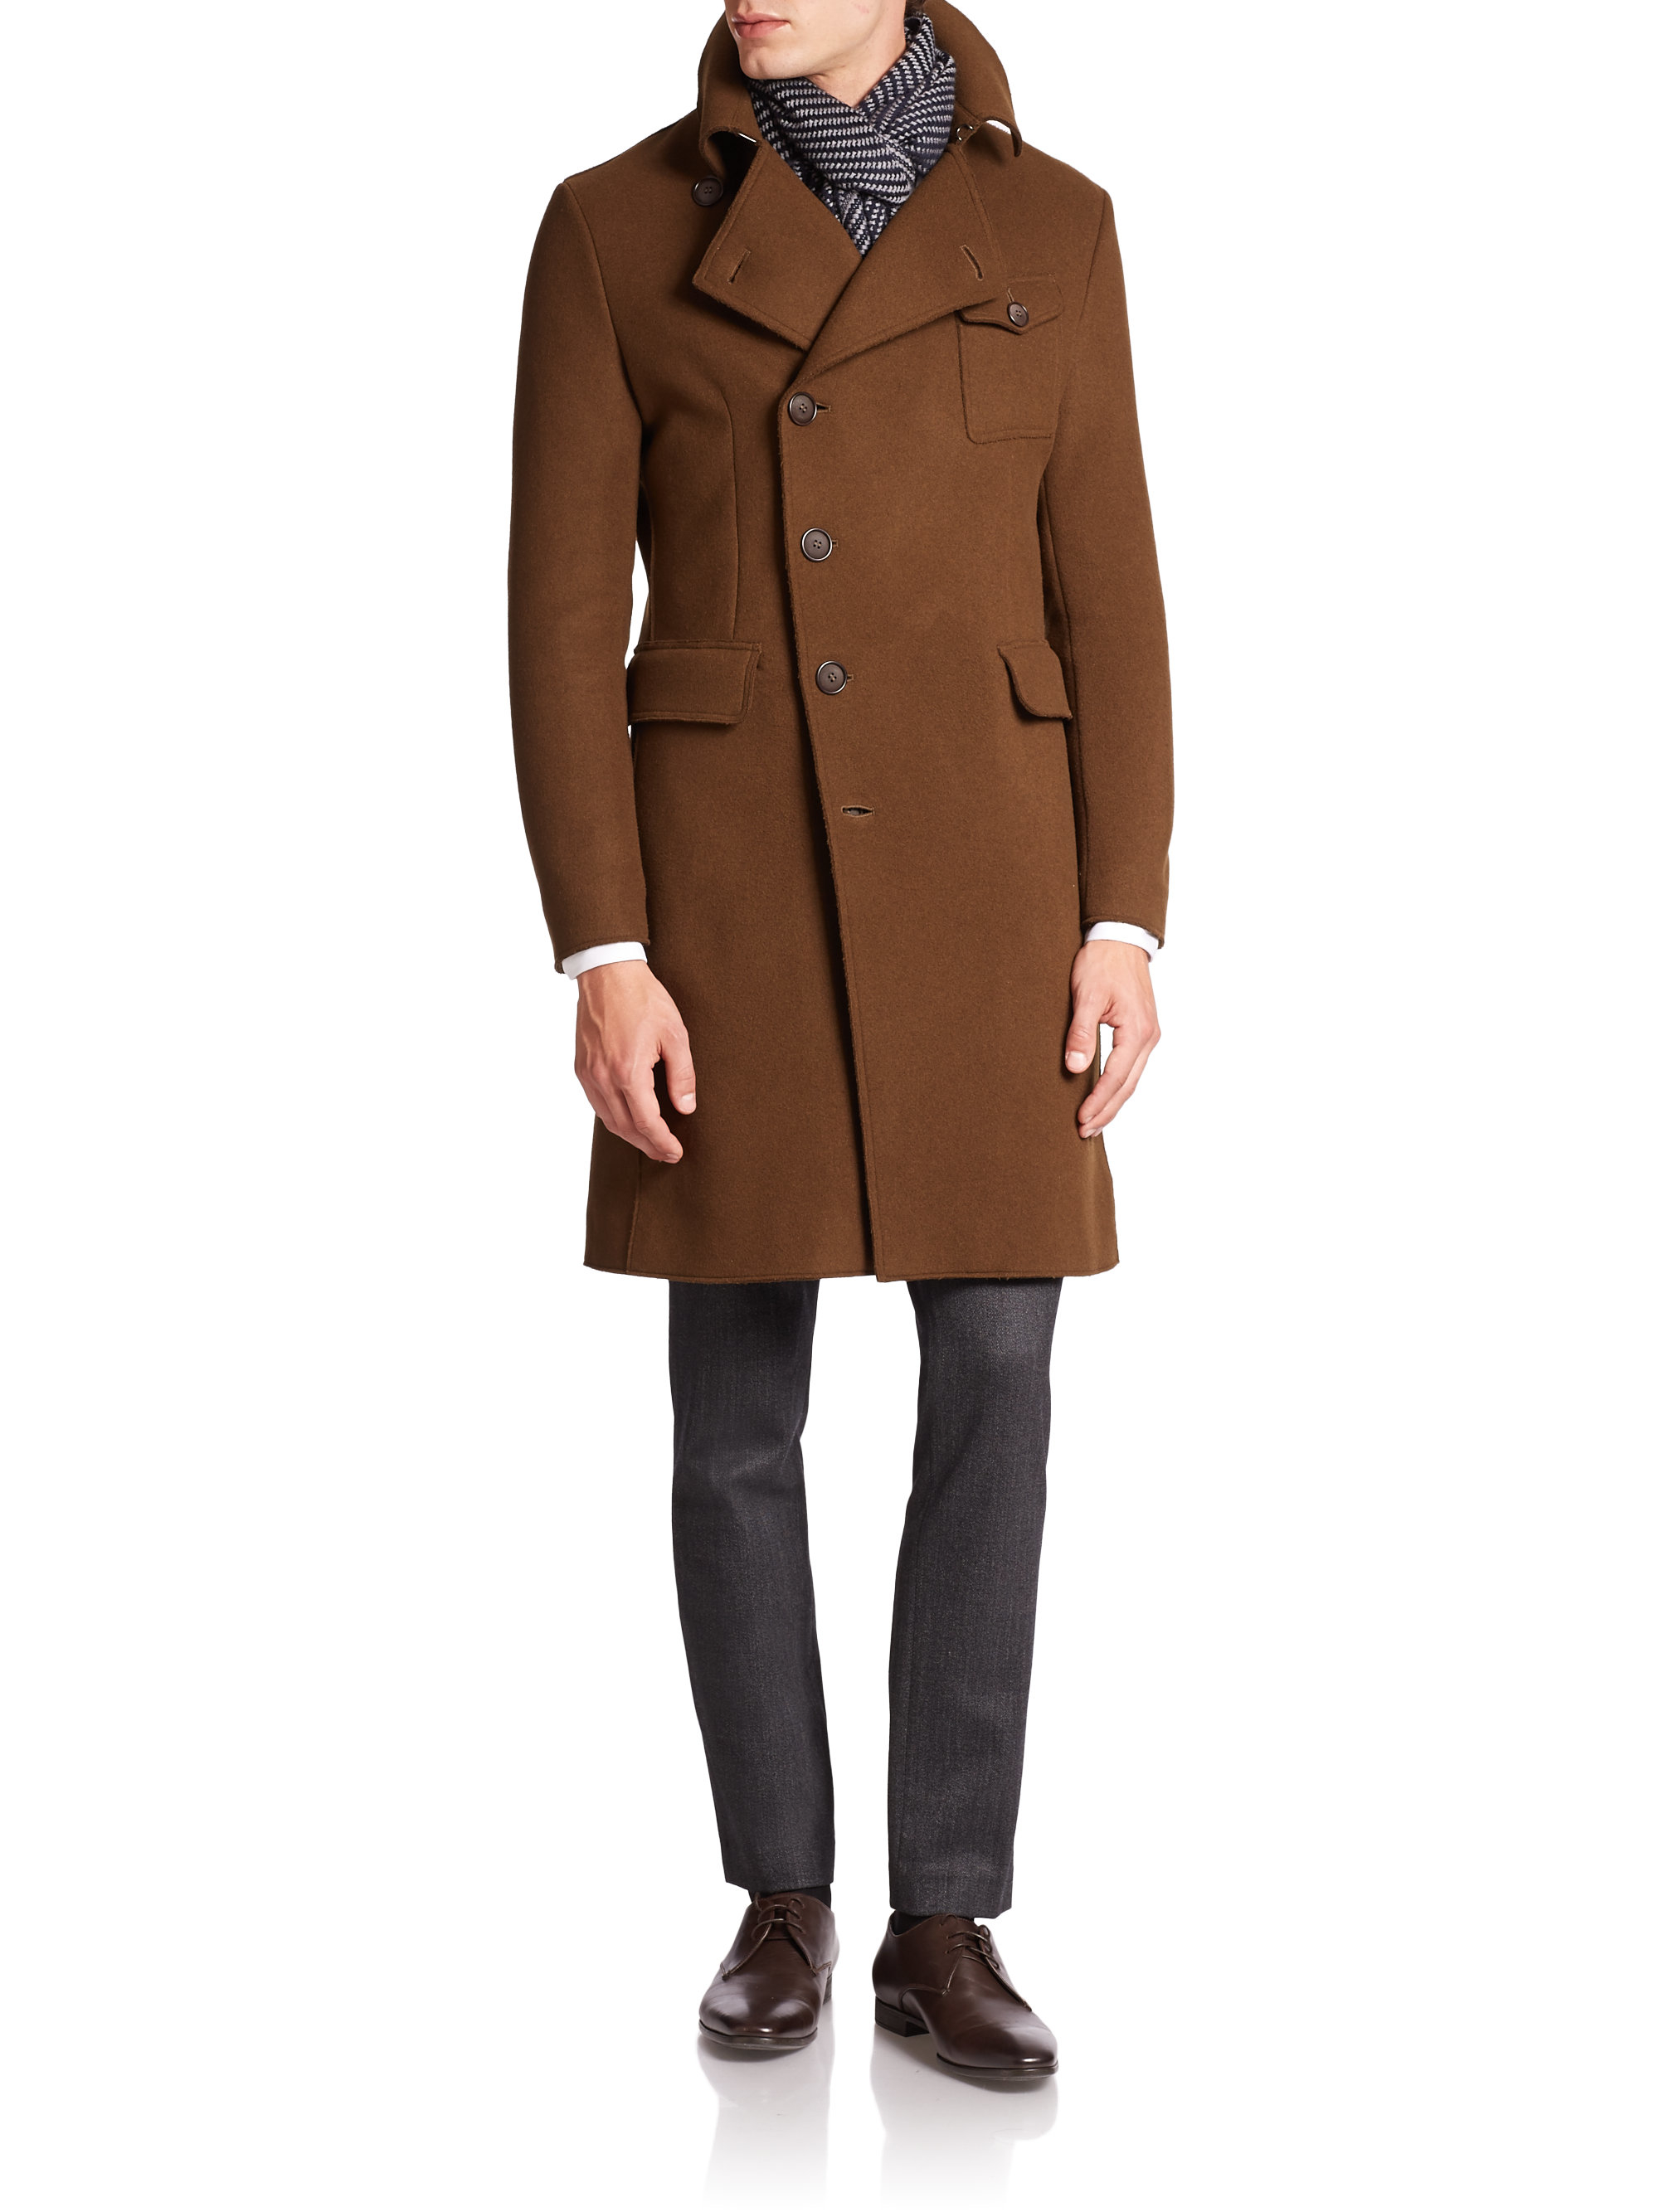 Giorgio Armani Virgin Wool Military Coat in Brown for Men - Lyst